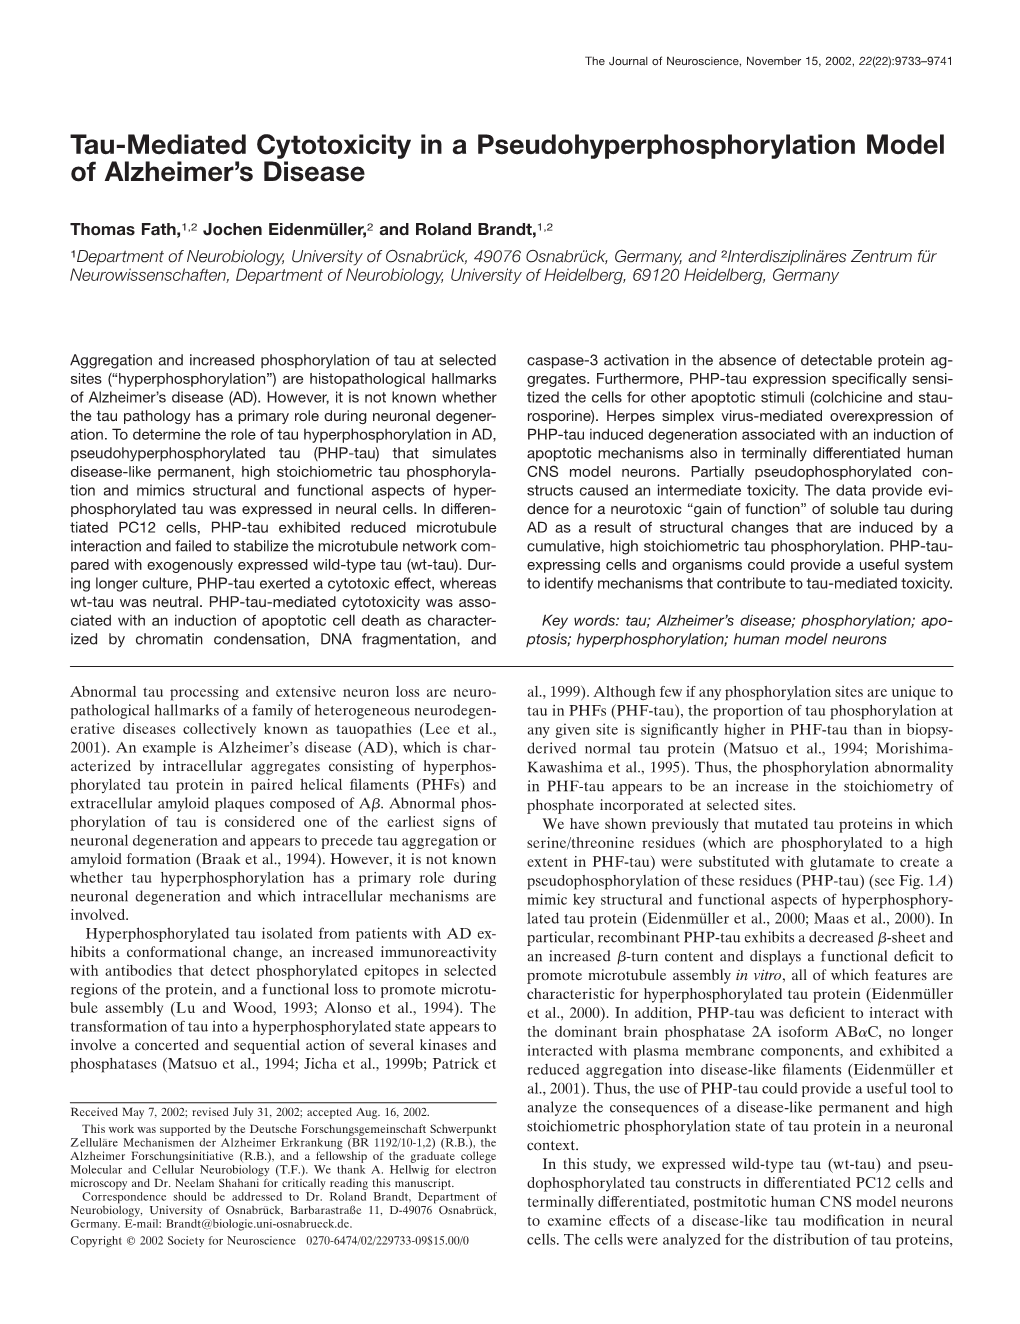 Tau-Mediated Cytotoxicity in a Pseudohyperphosphorylation Model of Alzheimer’S Disease